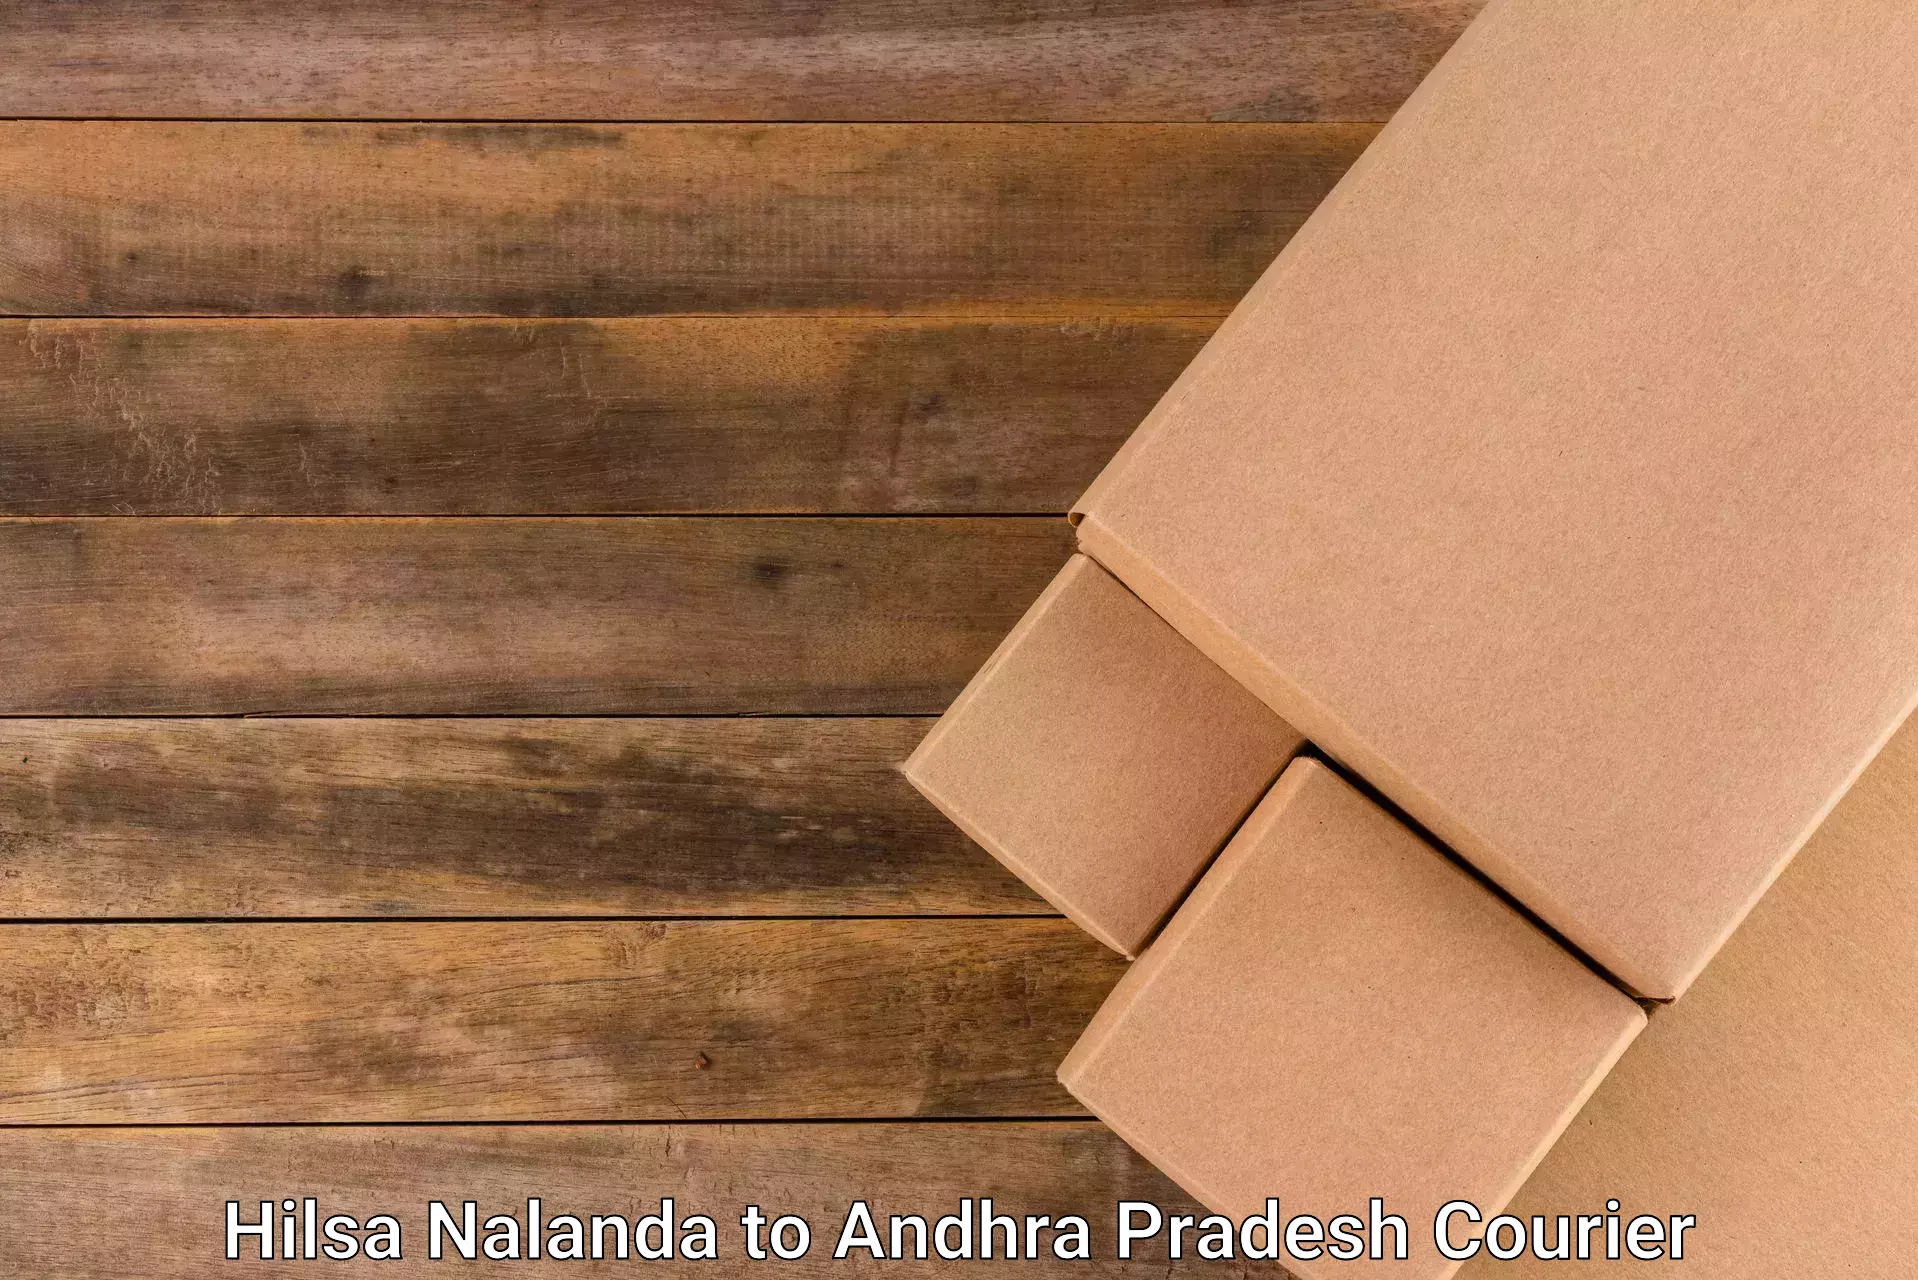 Global courier networks Hilsa Nalanda to Guntur